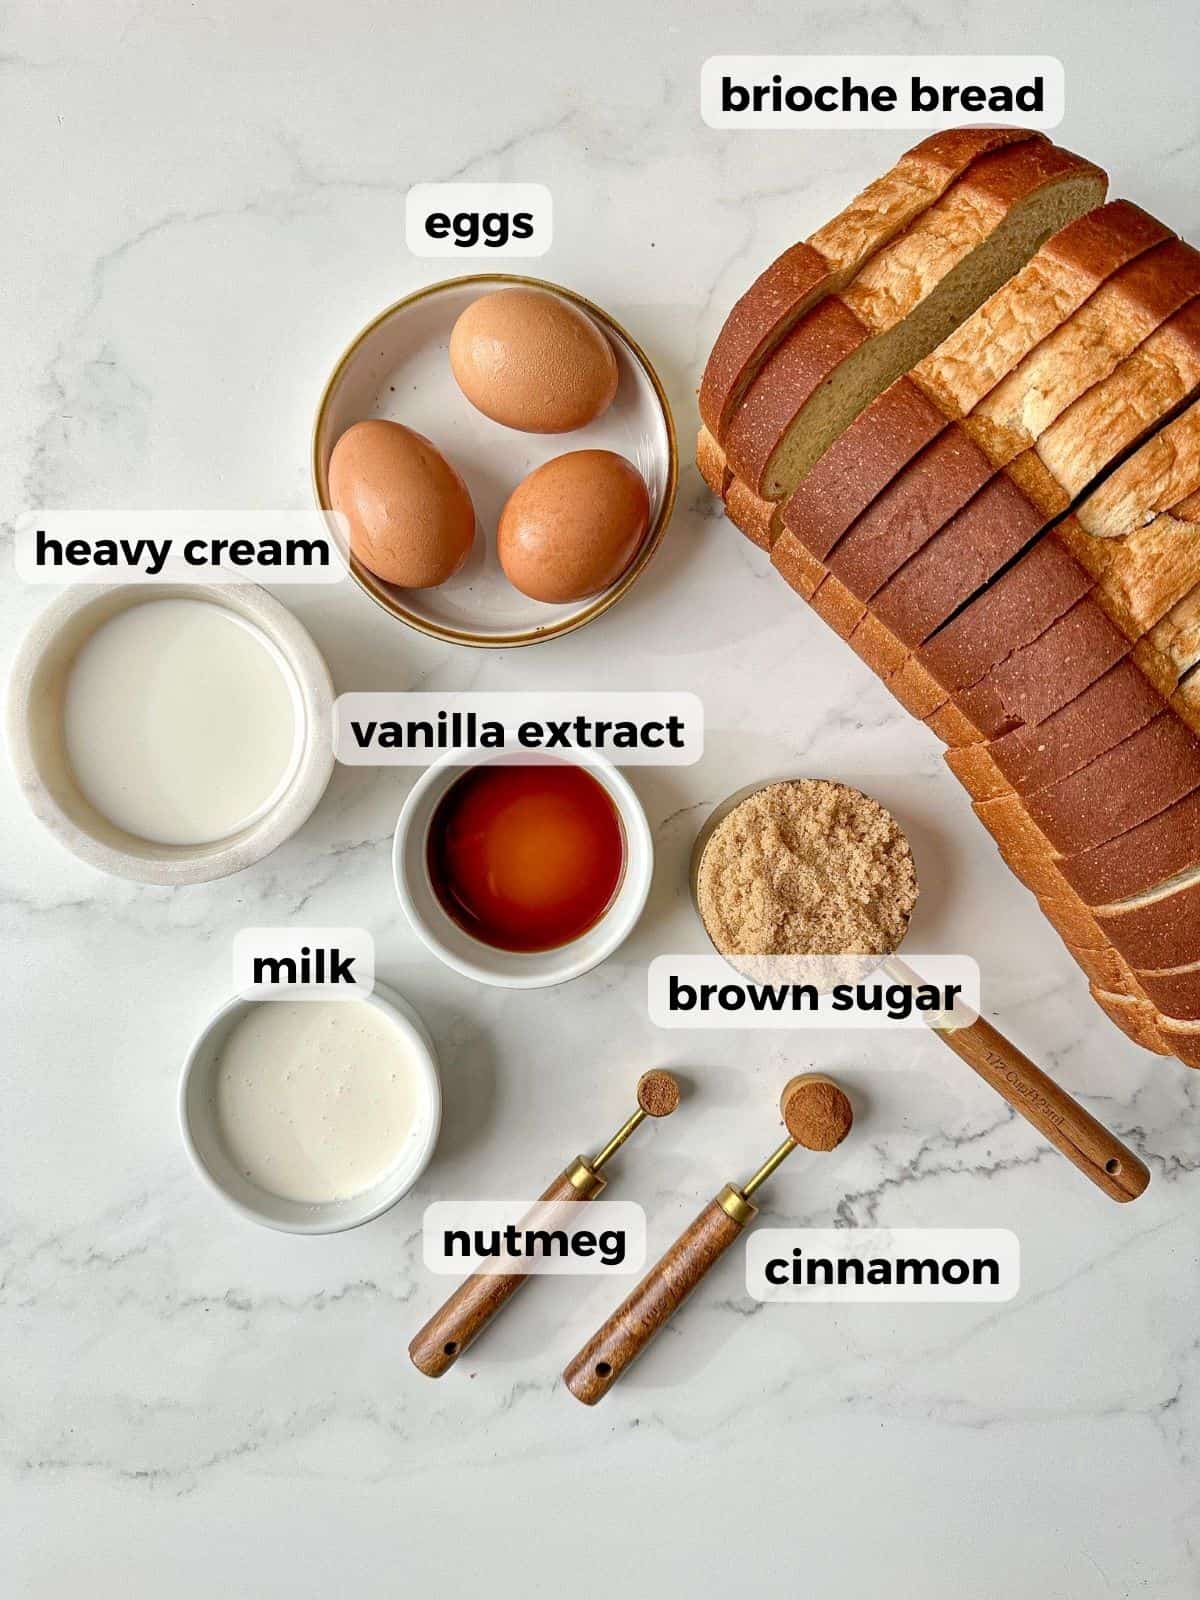 Ingredients needed to make this breakfast recipe include: brioche bread, eggs, milk, heavy cream, brown sugar, vanilla extract, cinnamon, and nutmeg.